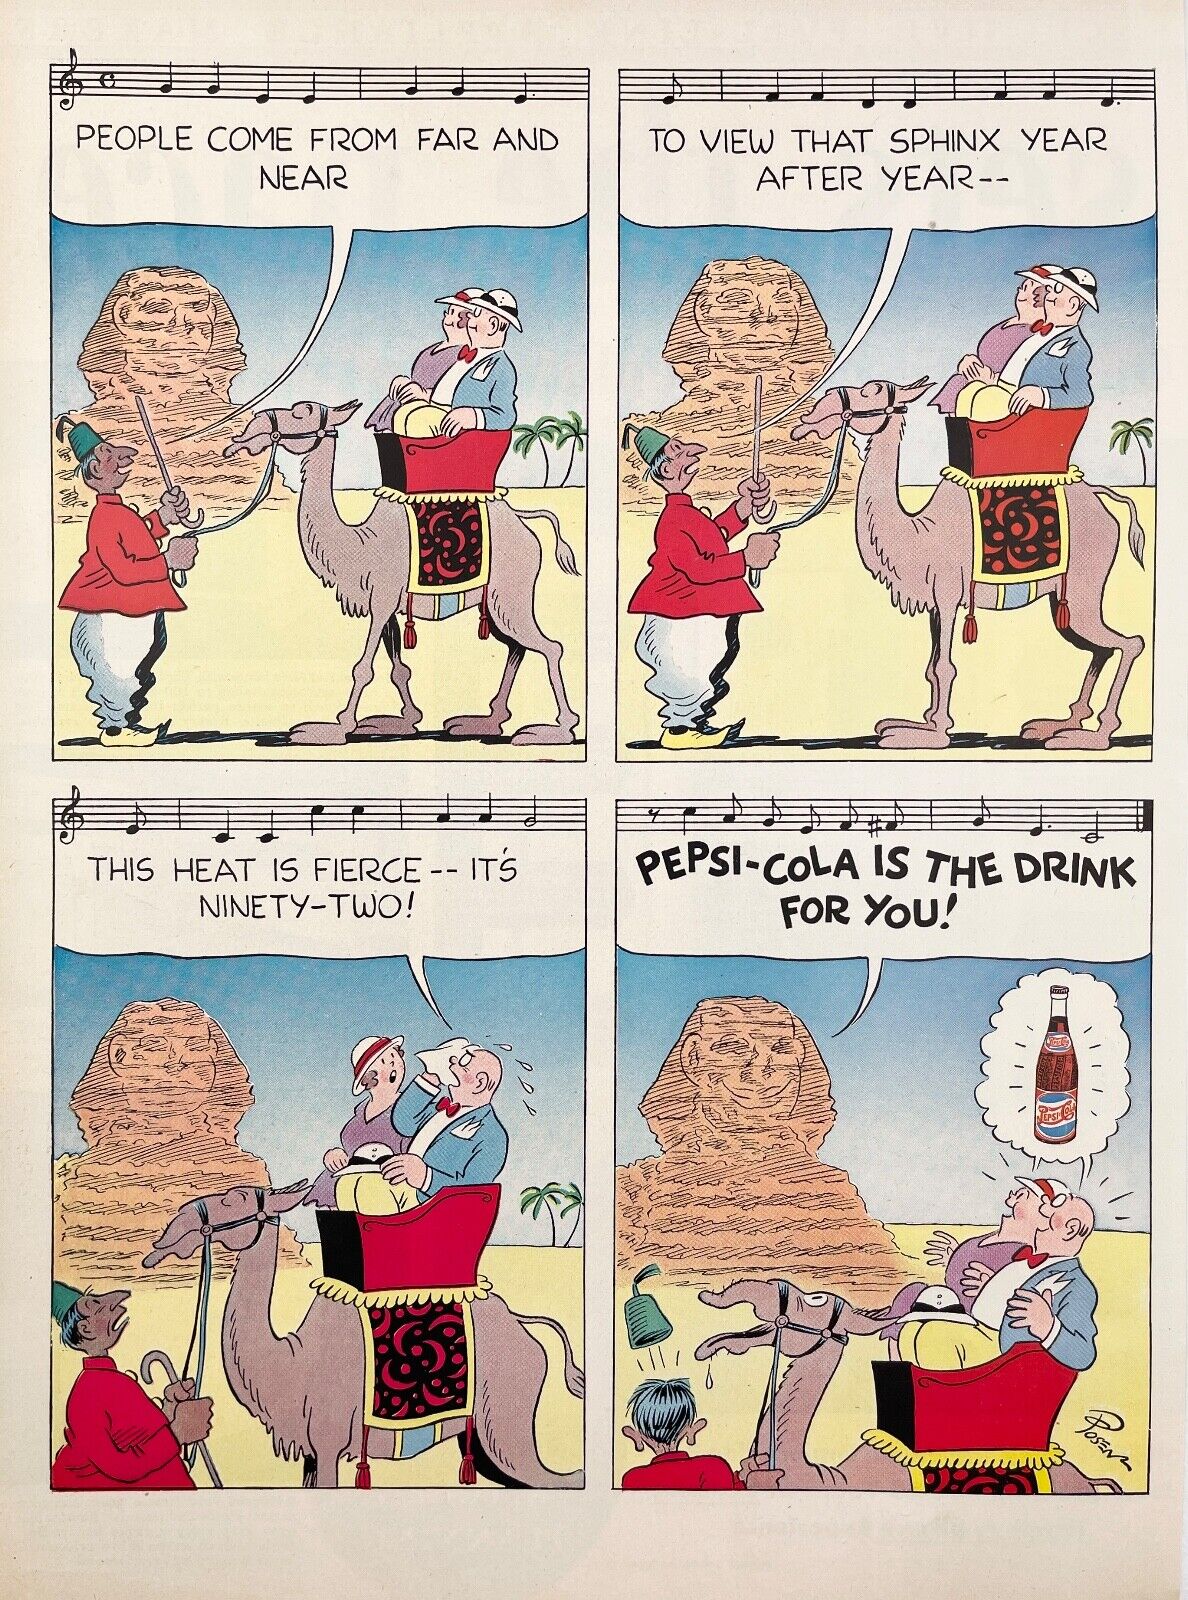 1947 Pepsi Cola Egypt Desert Sphinx Camel Posen Funny Comic Art Vintage Print Ad